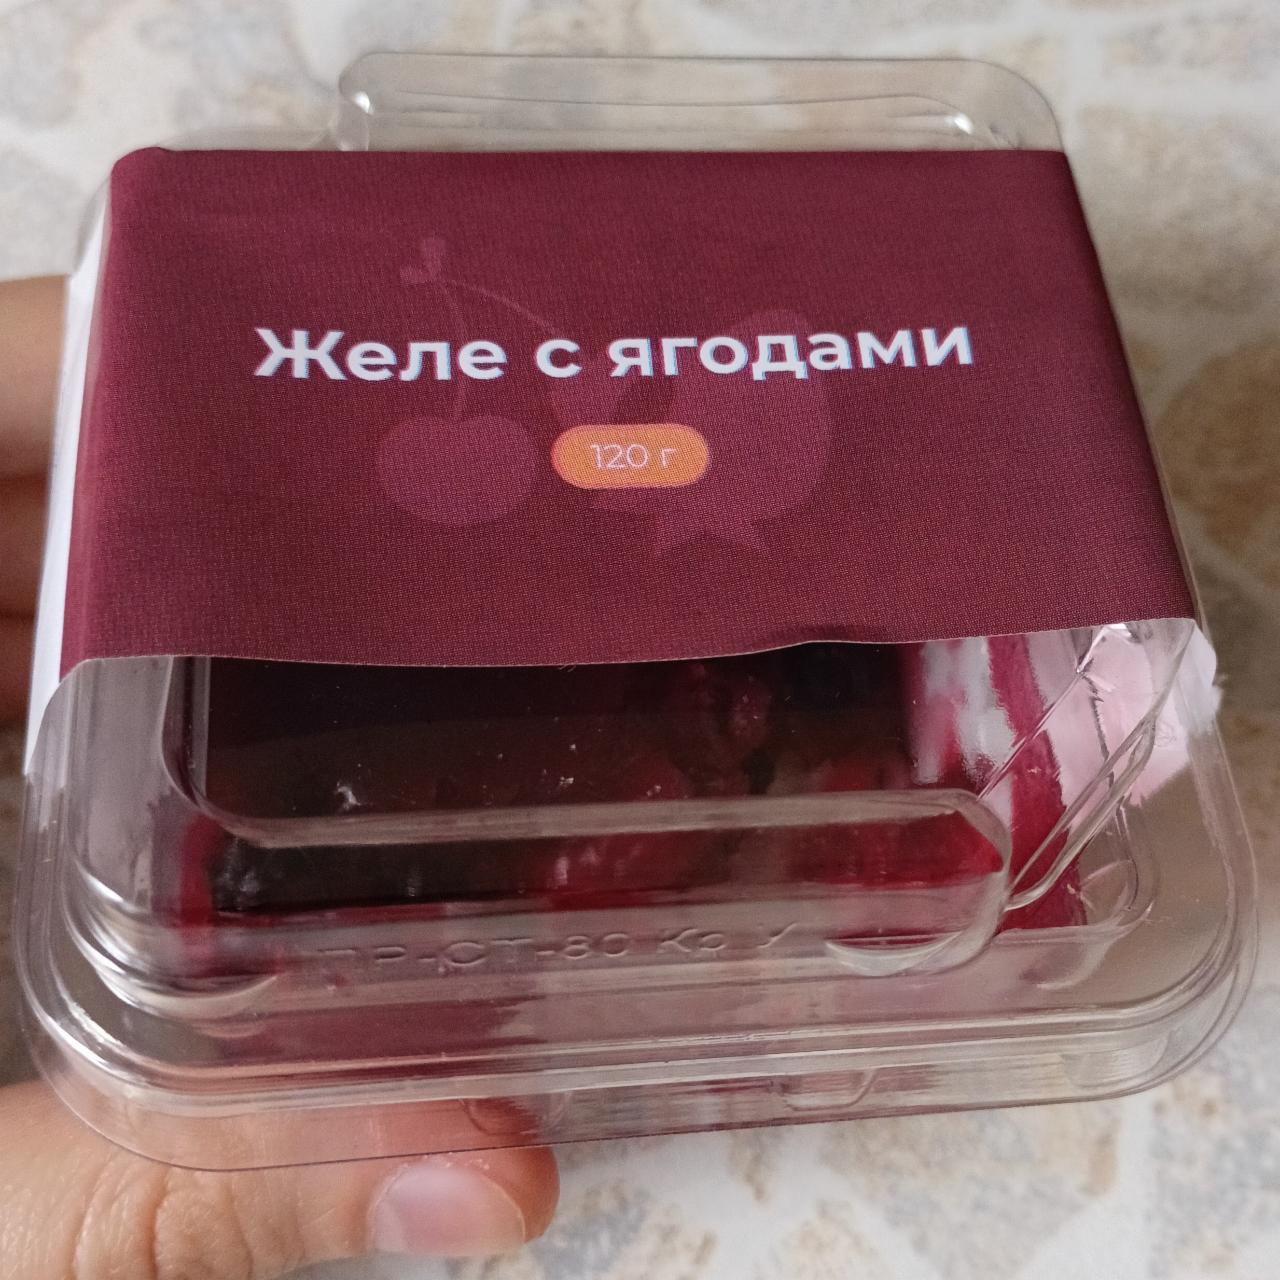 Фото - Желе с ягодами из лавки Яндекс Лавка